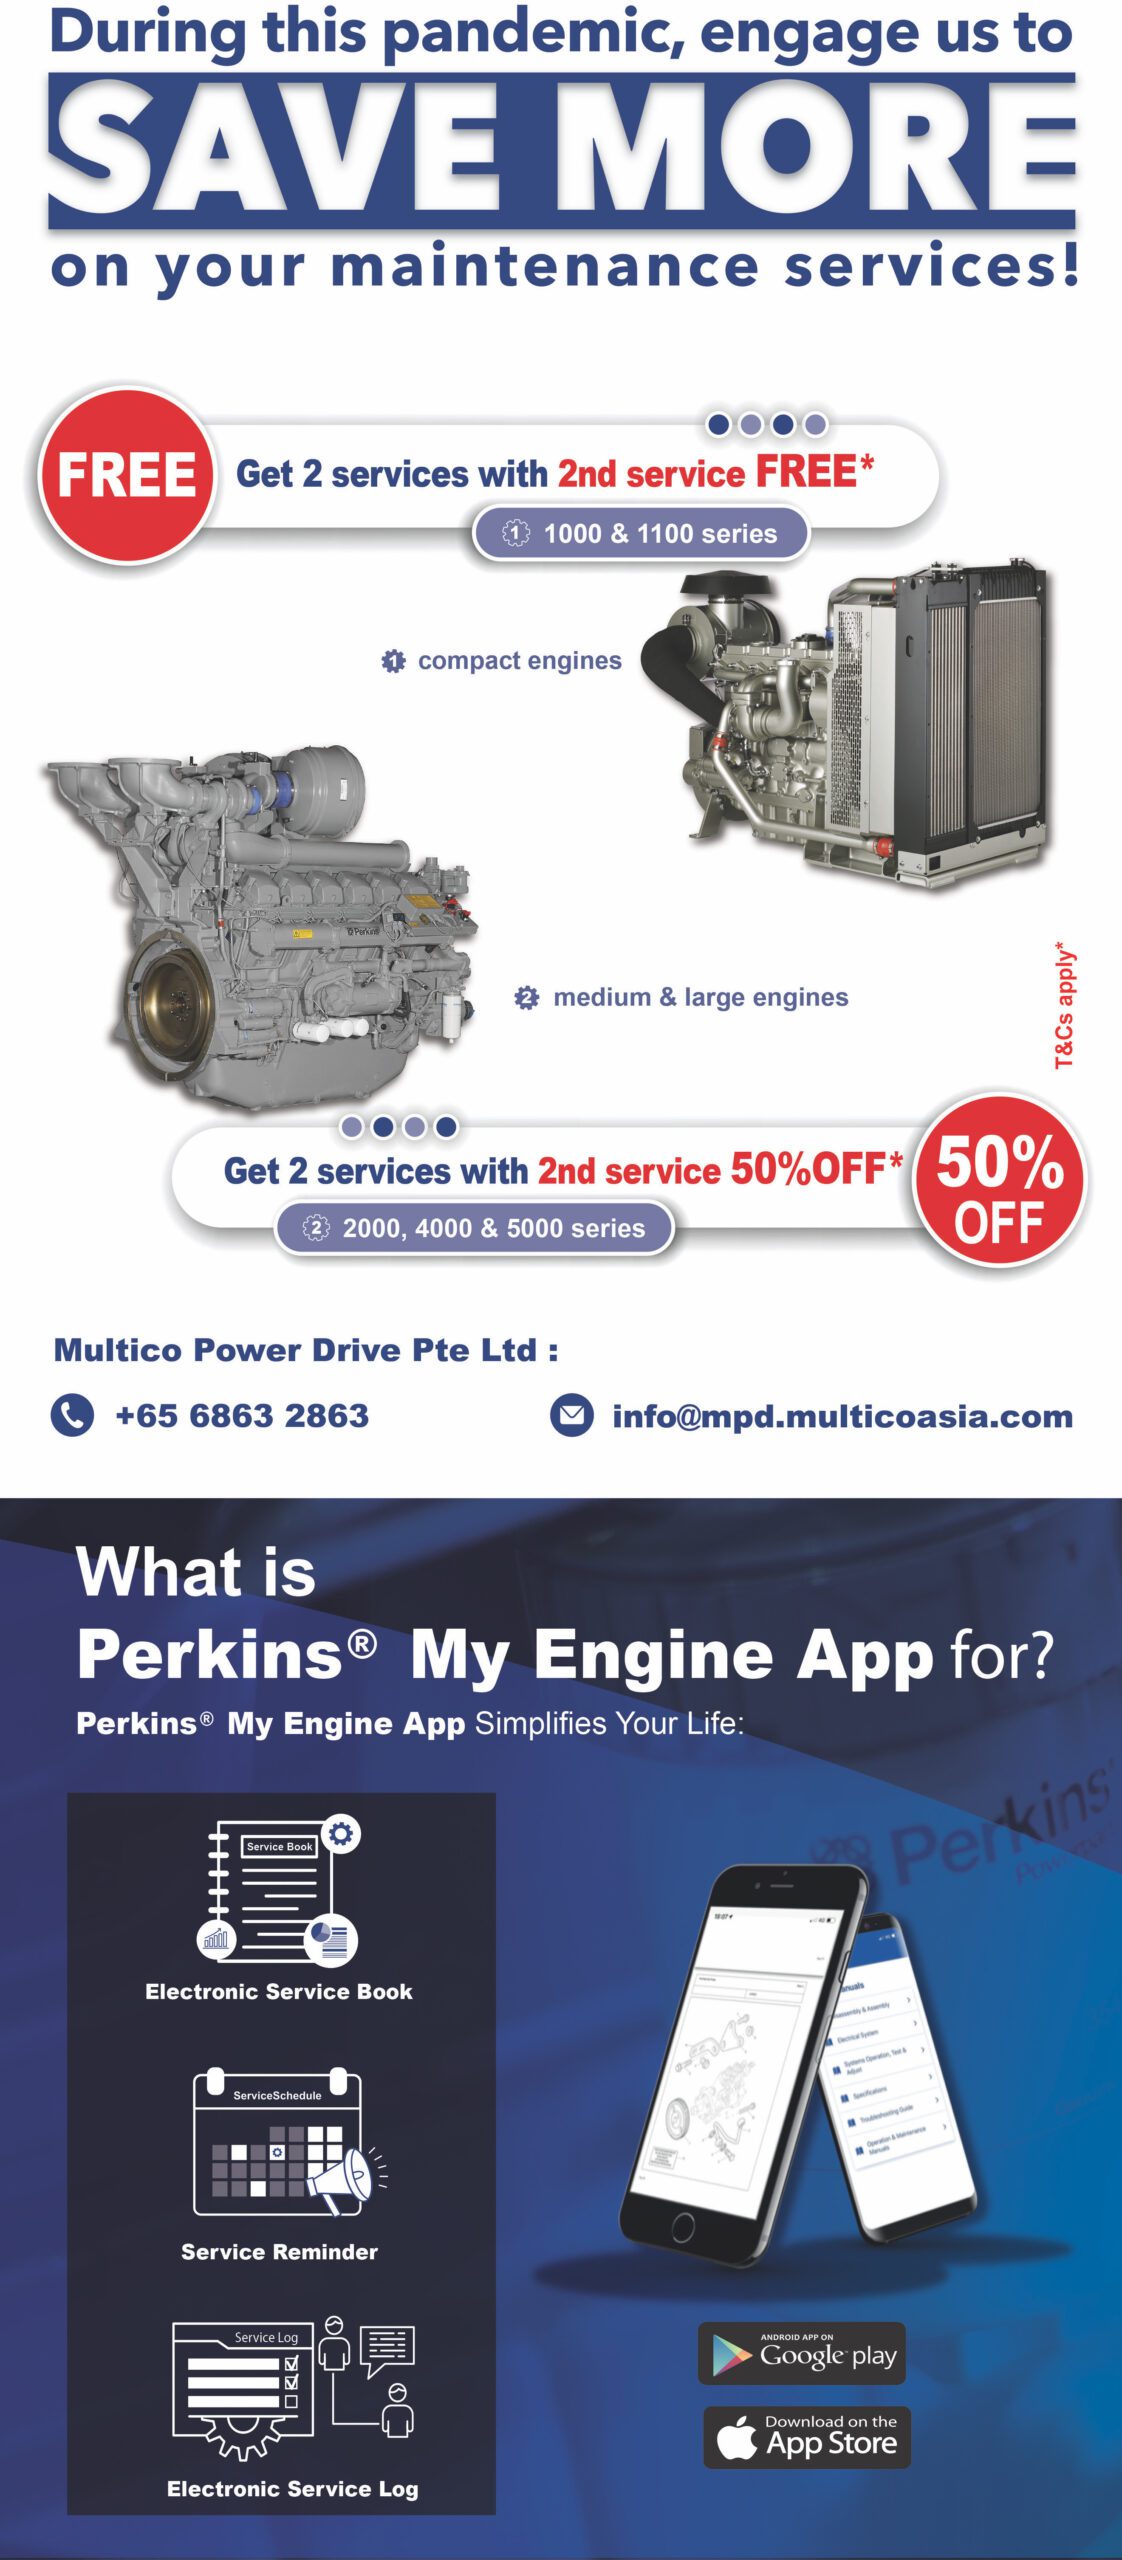 Perkins® My Engine App